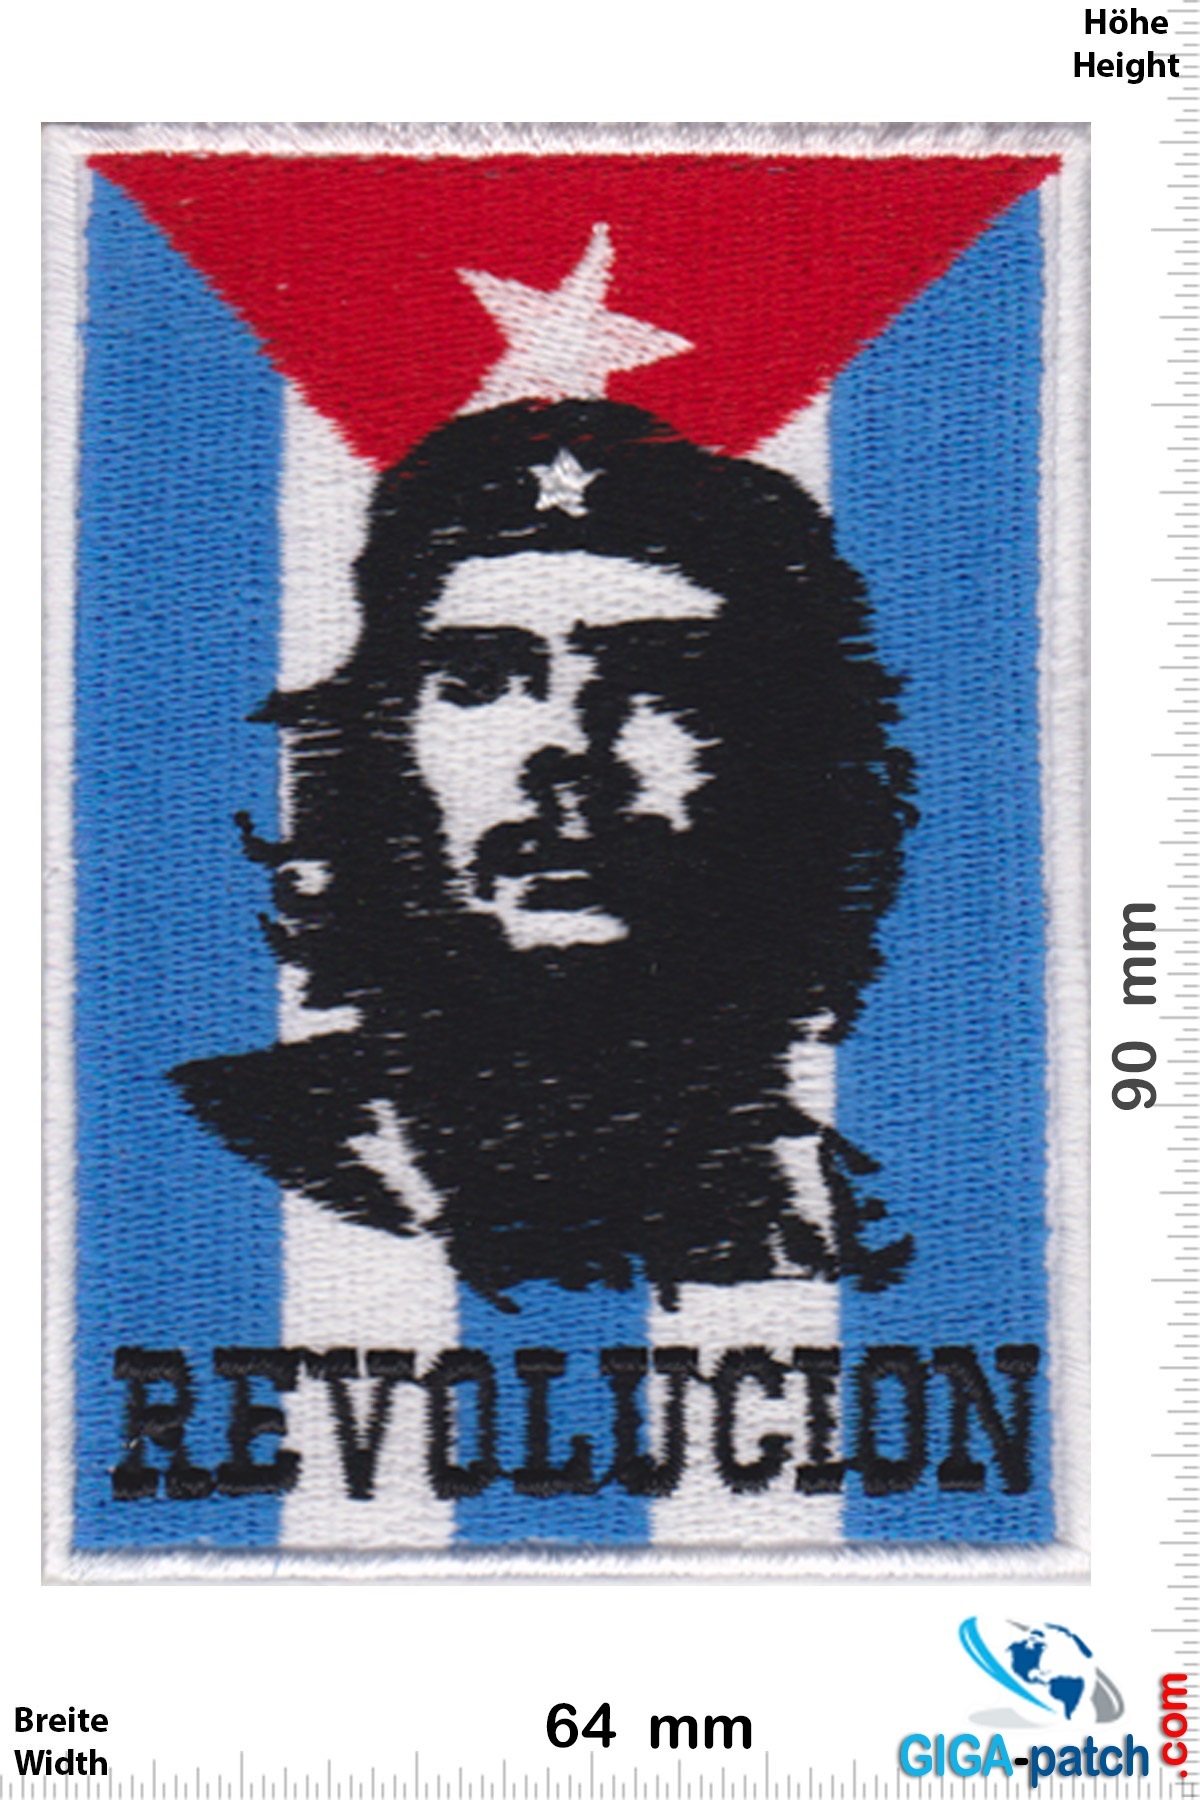 Che Guevara Che Guevara - Freiheitskampfer - Revolucion